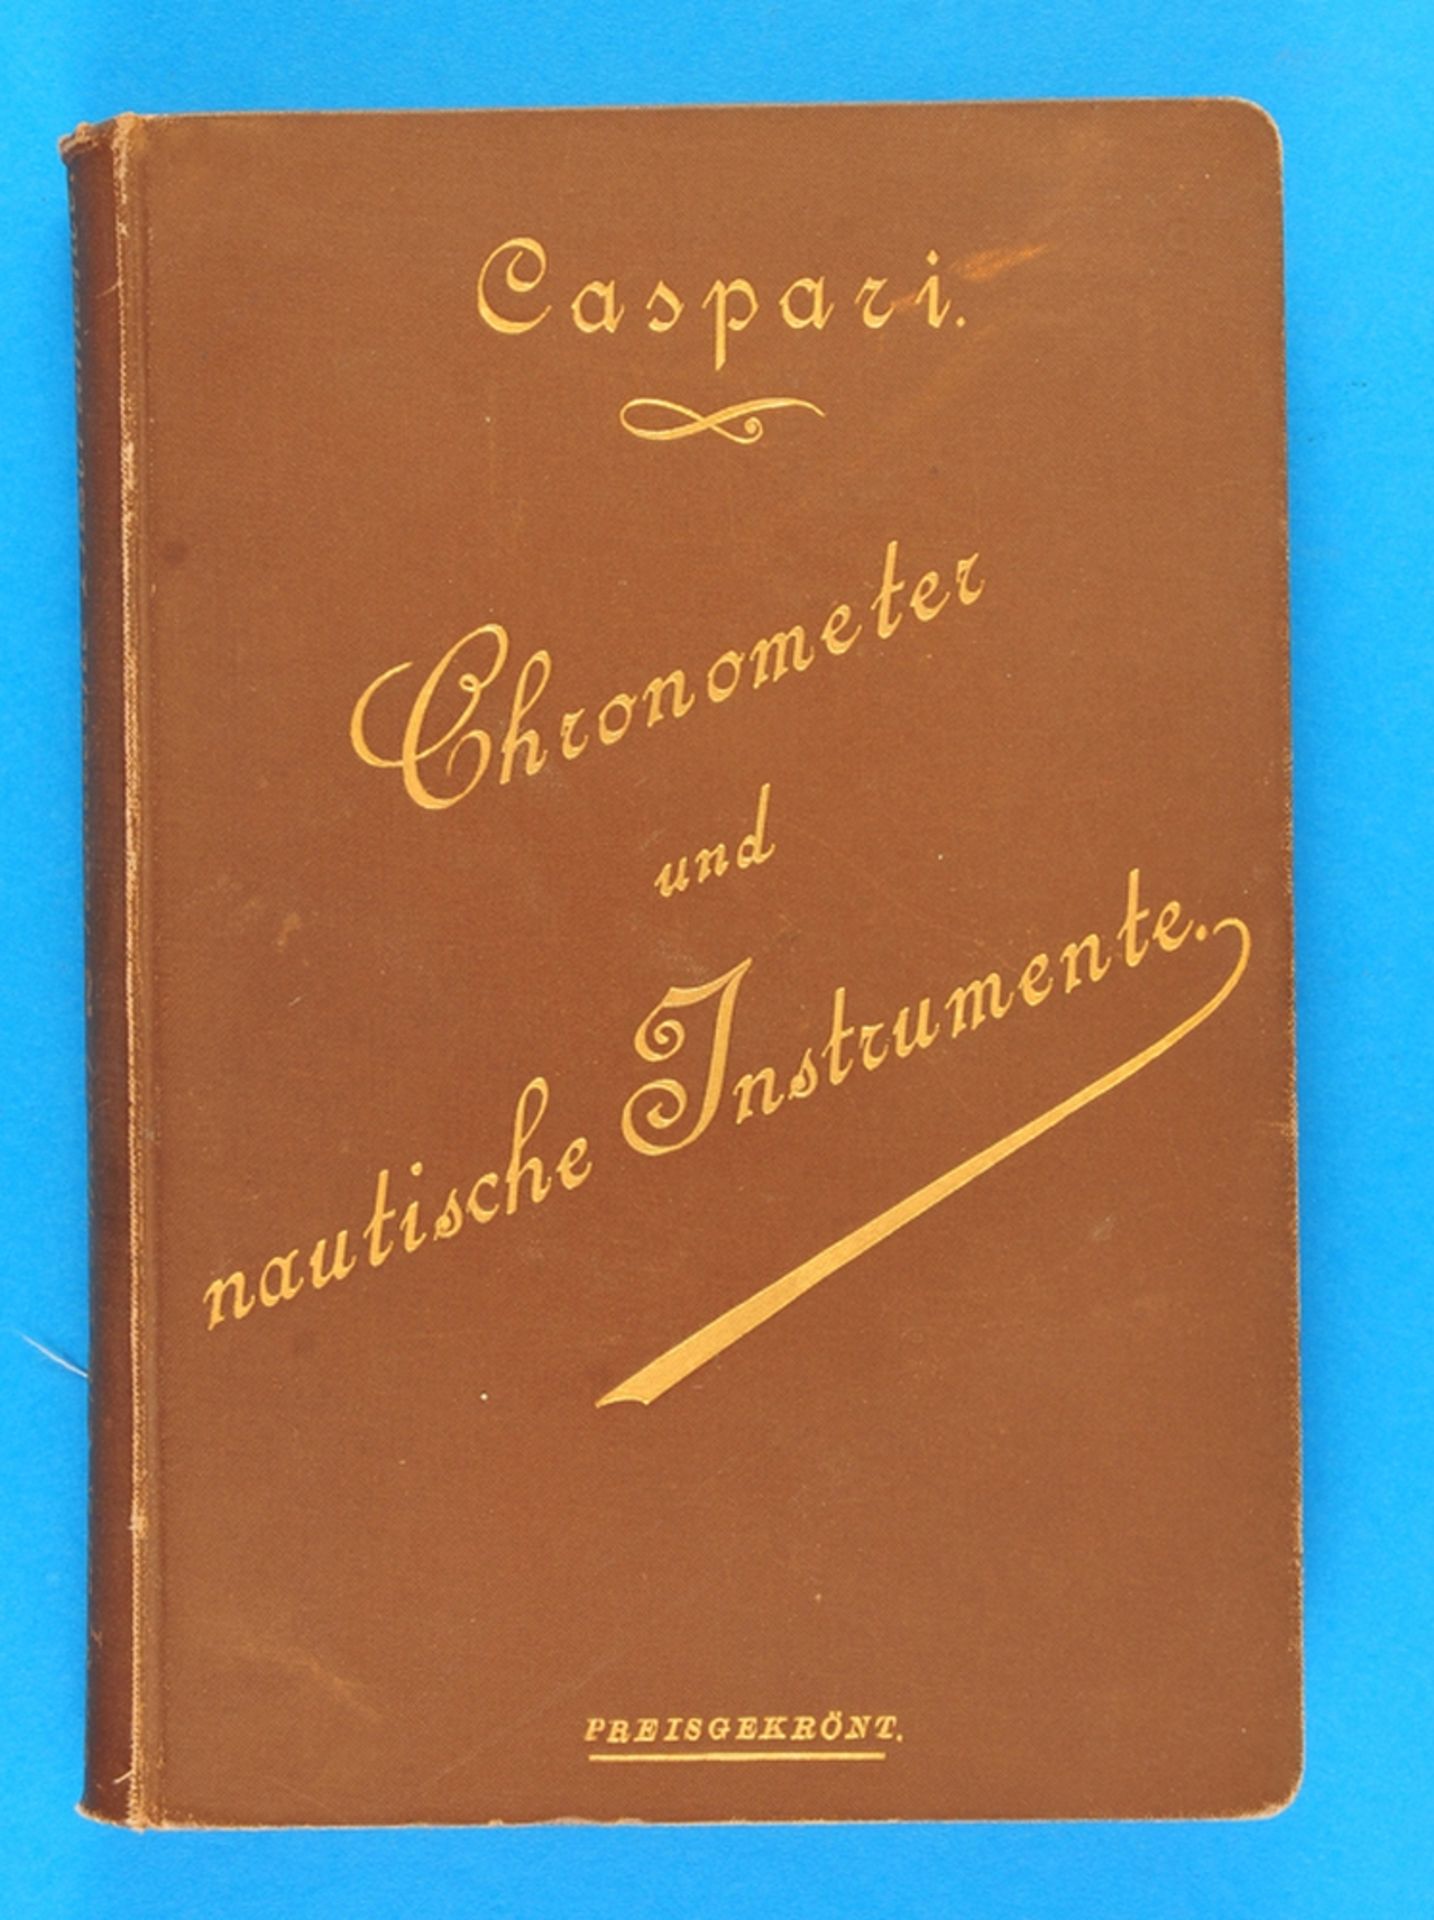 E. Caspari, Chronometer und nautische Instrumente, 1893